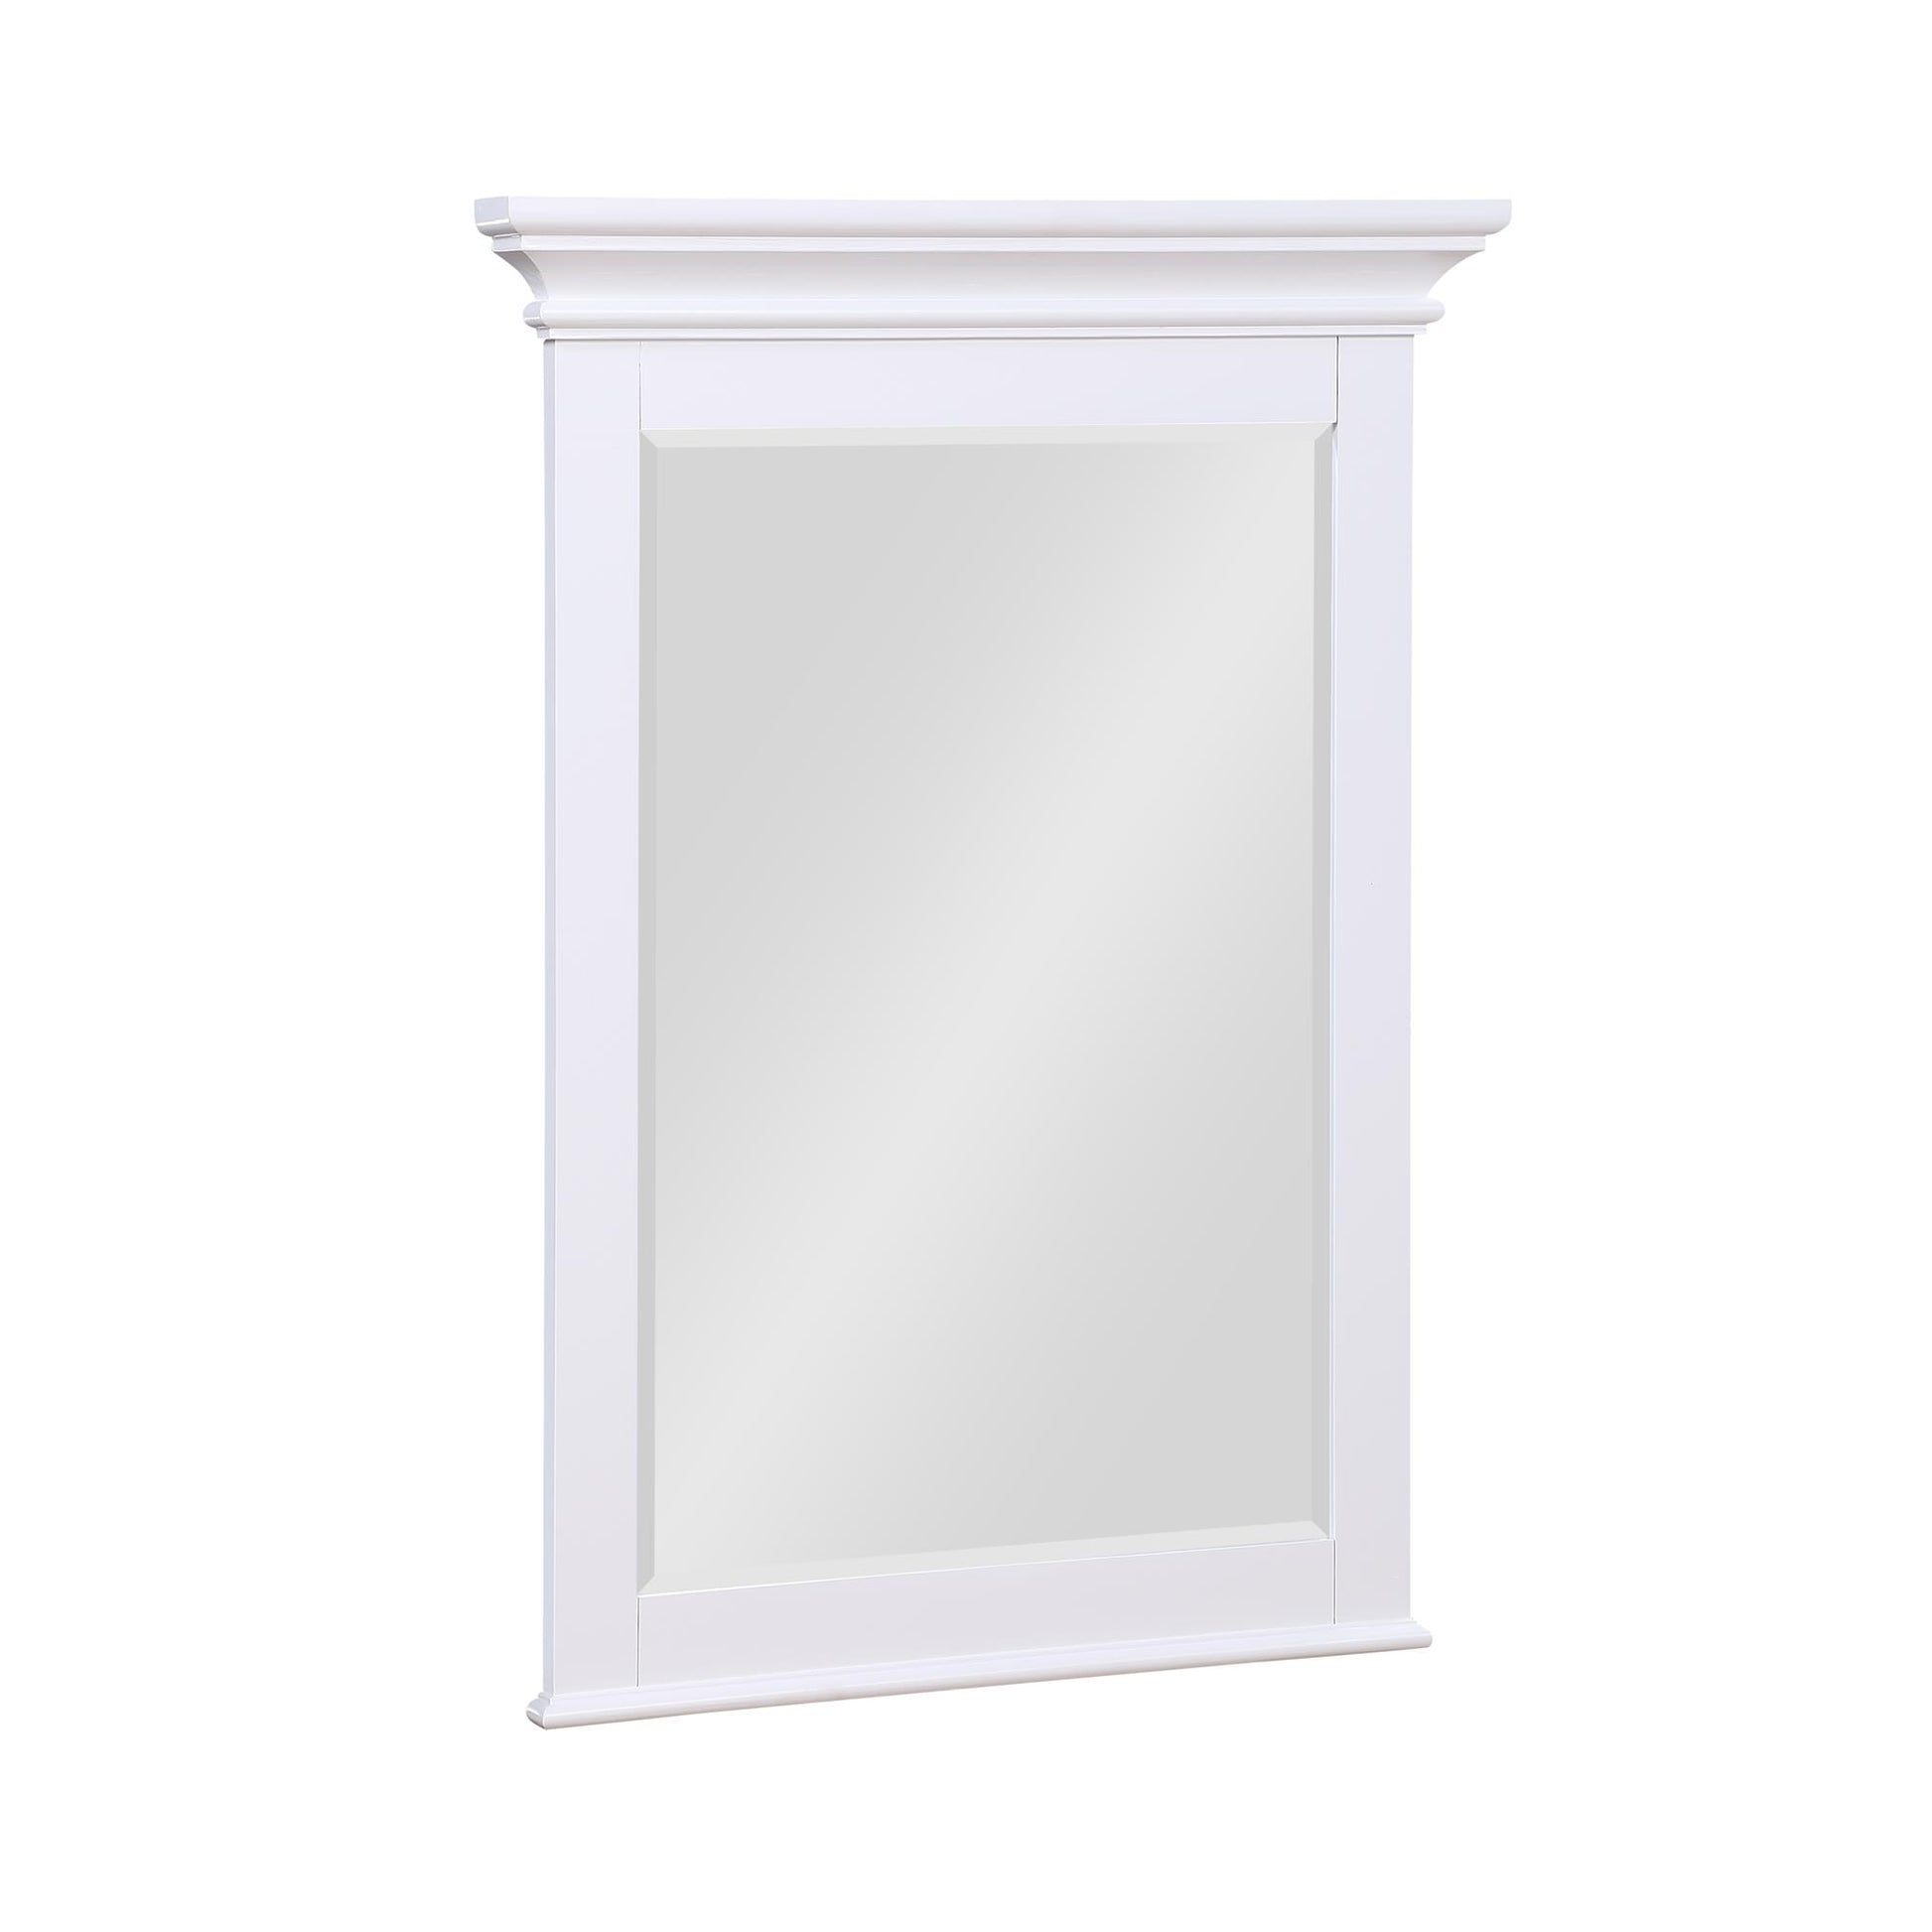 Monteray Beach 24 Inch Bathroom Mirror with Decorative Crown Molding - White - 24"